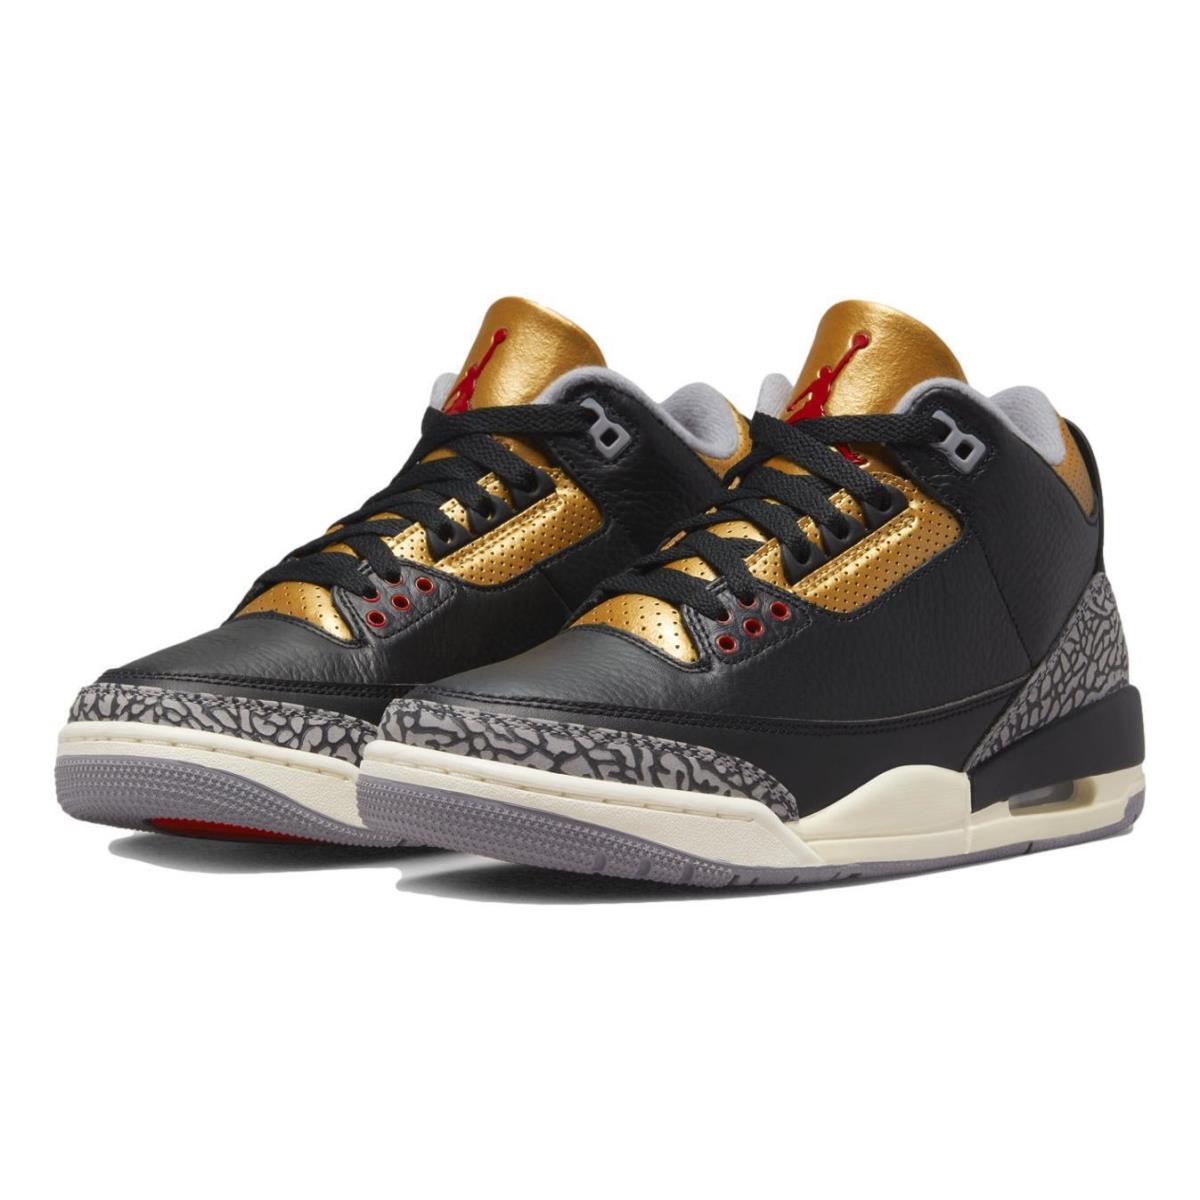 Nike Women`s Air Jordan 3 Retro `black Gold` Shoes Sneakers CK9246-067 - Black/Fire Red-Metallic Gold